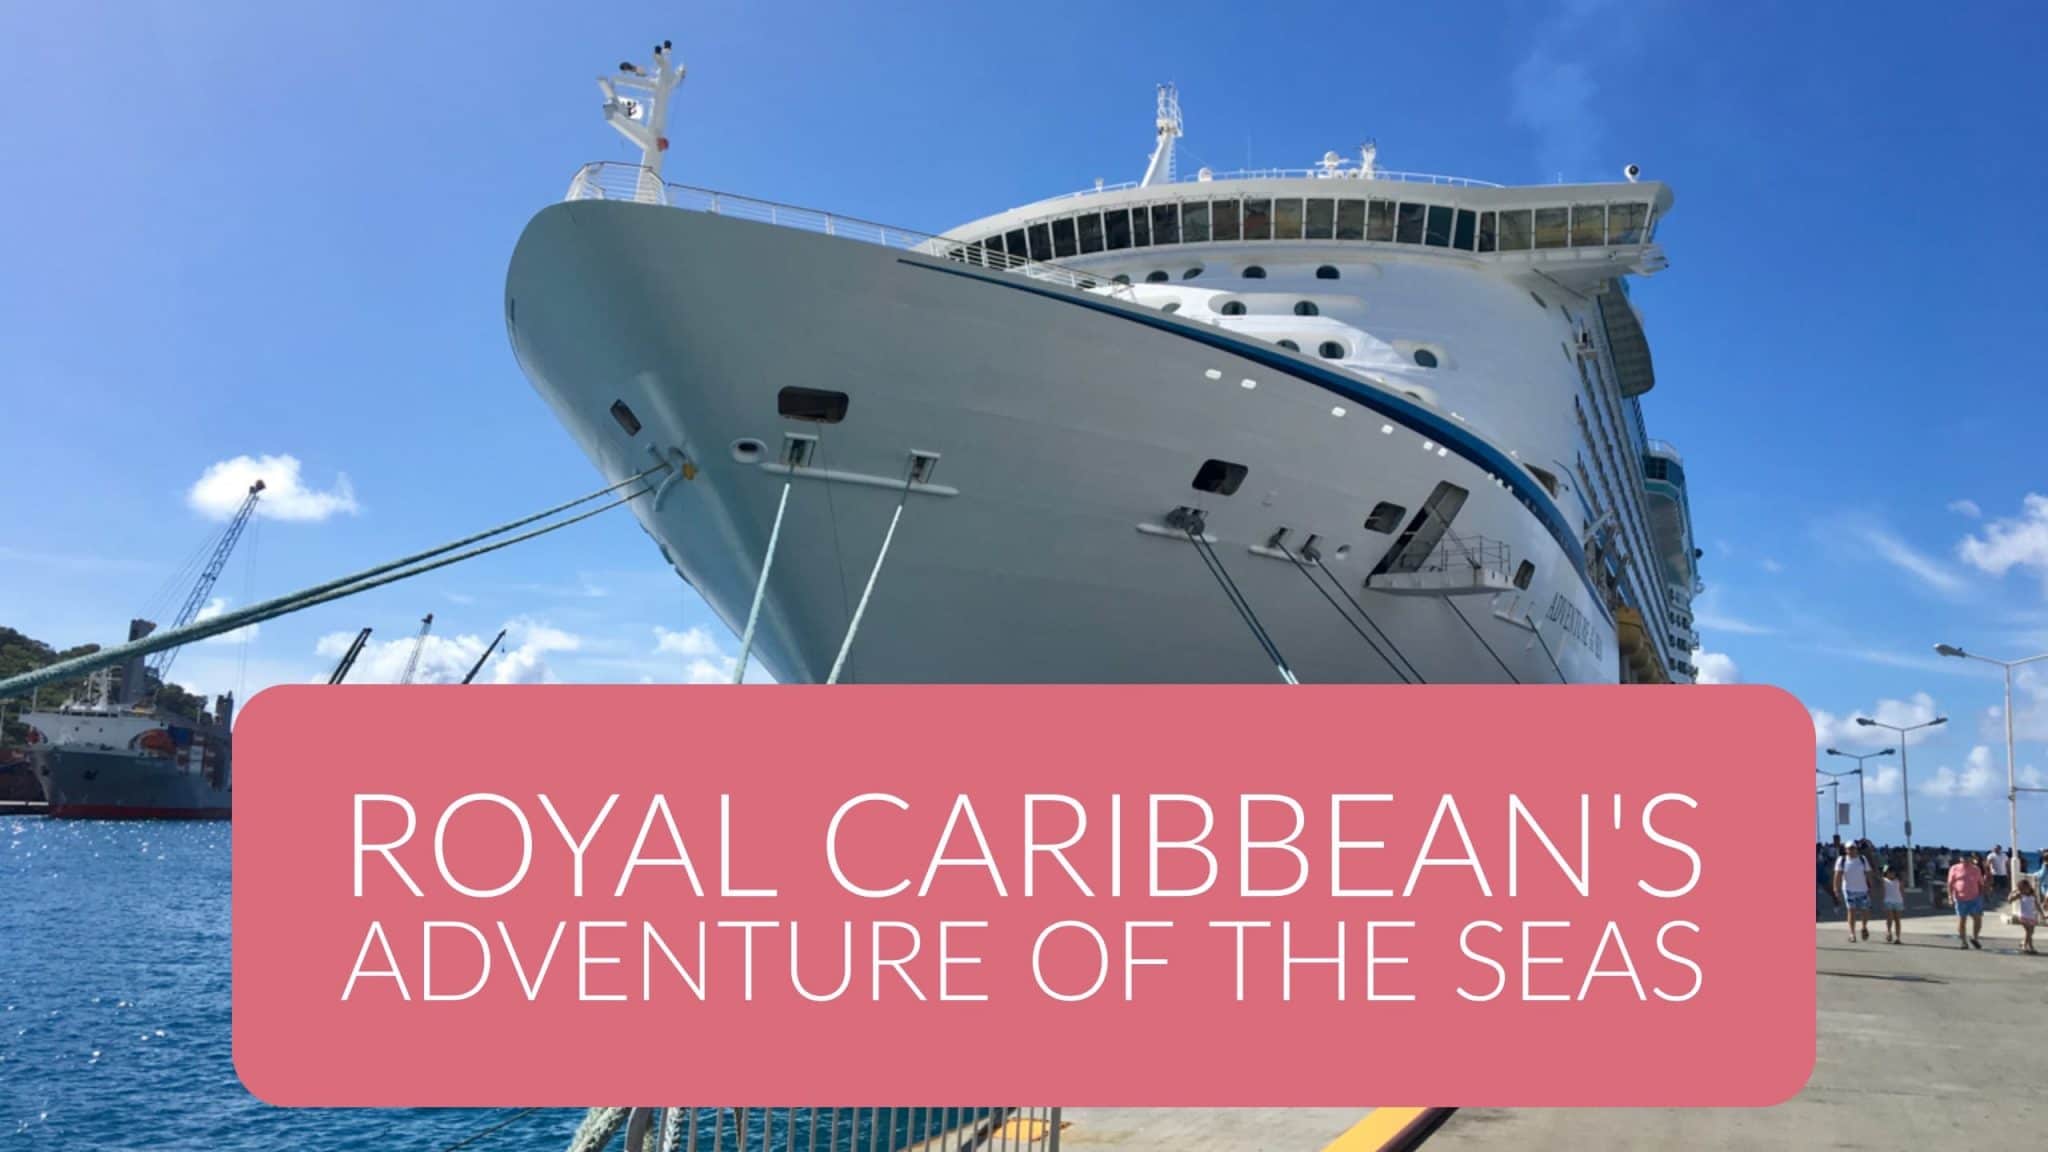 Royal Caribbean's Adventure of the Seas